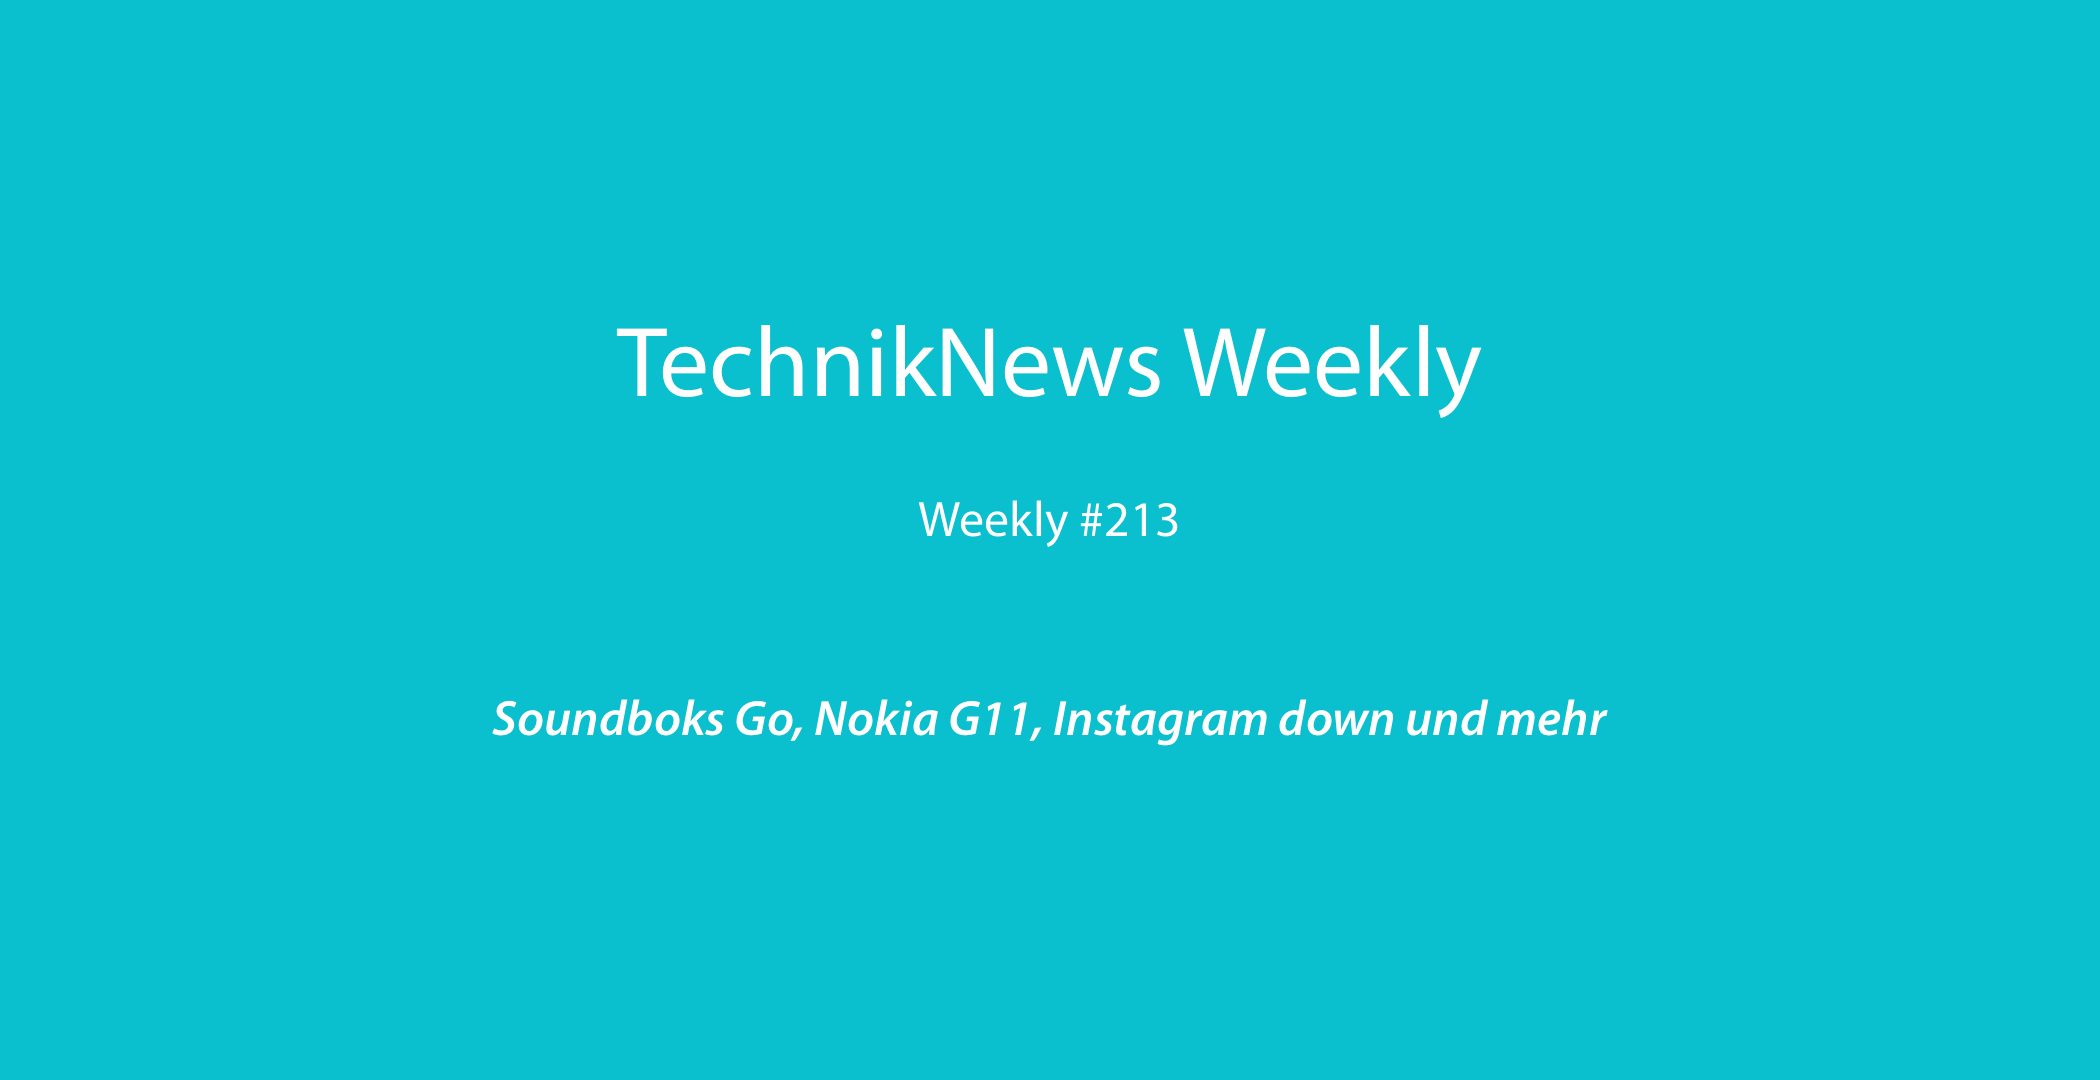 TechnikNews Weekly 213